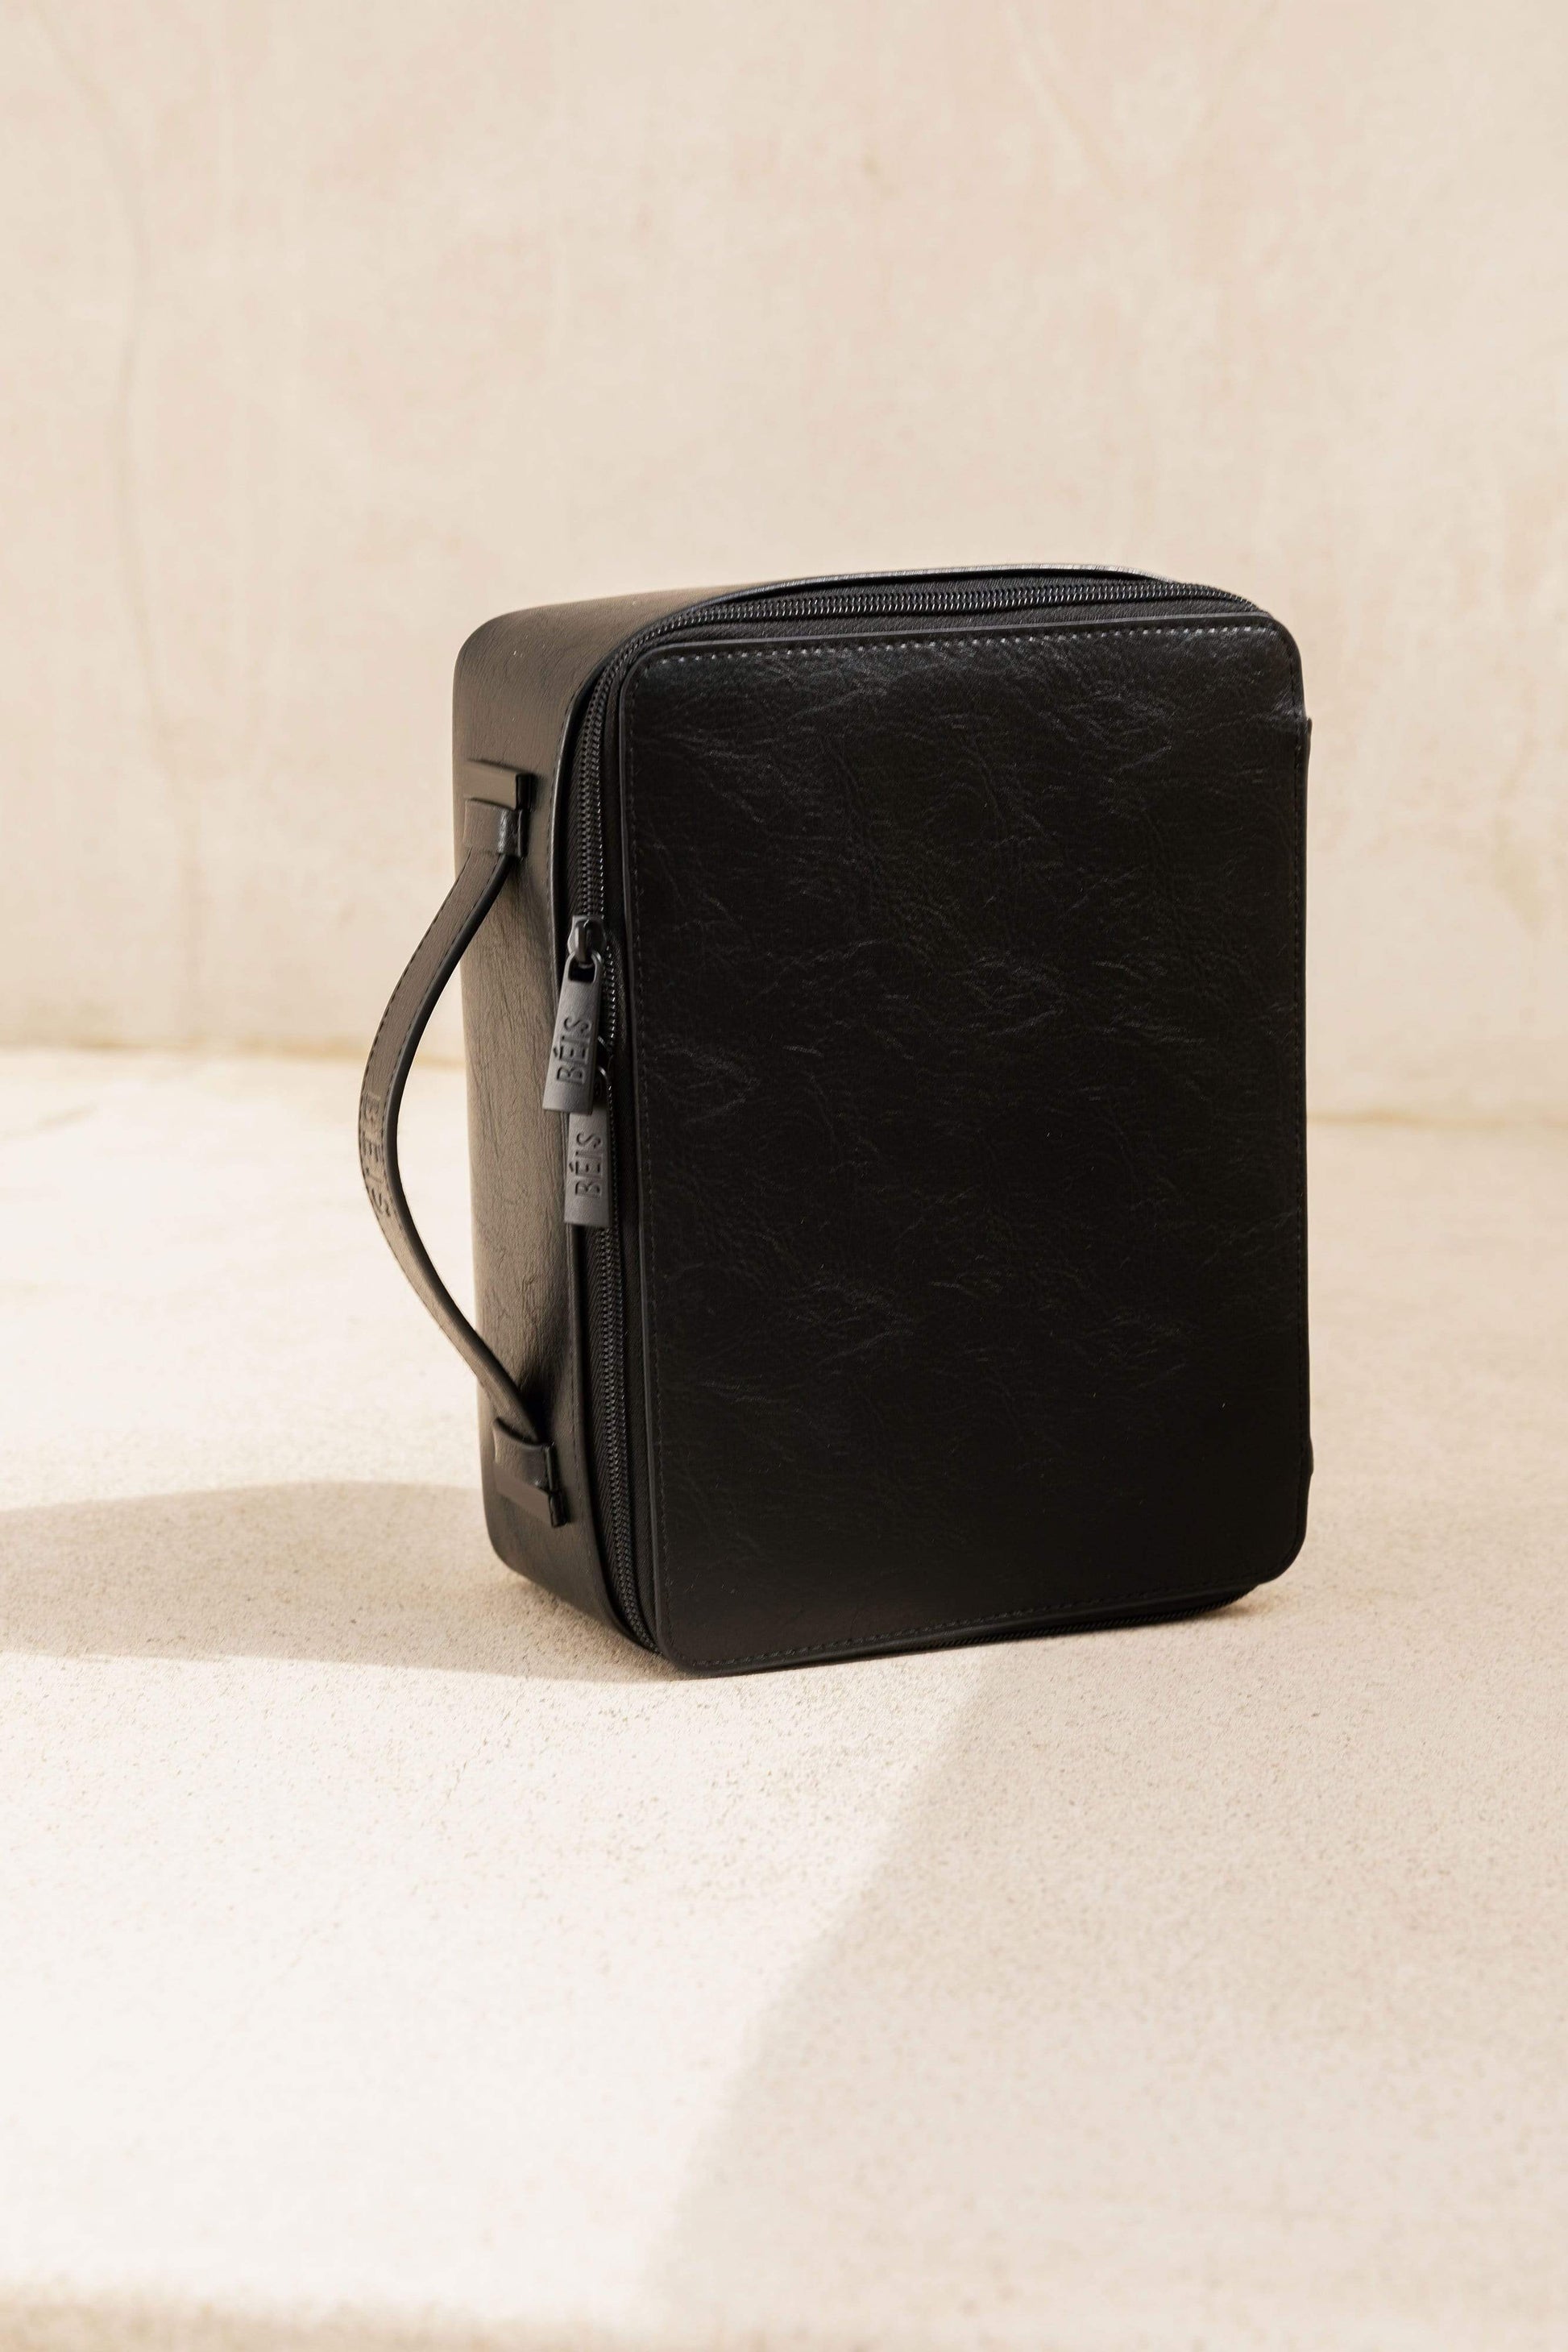 TikTok's Must-Have Handbag Is an Under-$100 Cosmetics Pouch